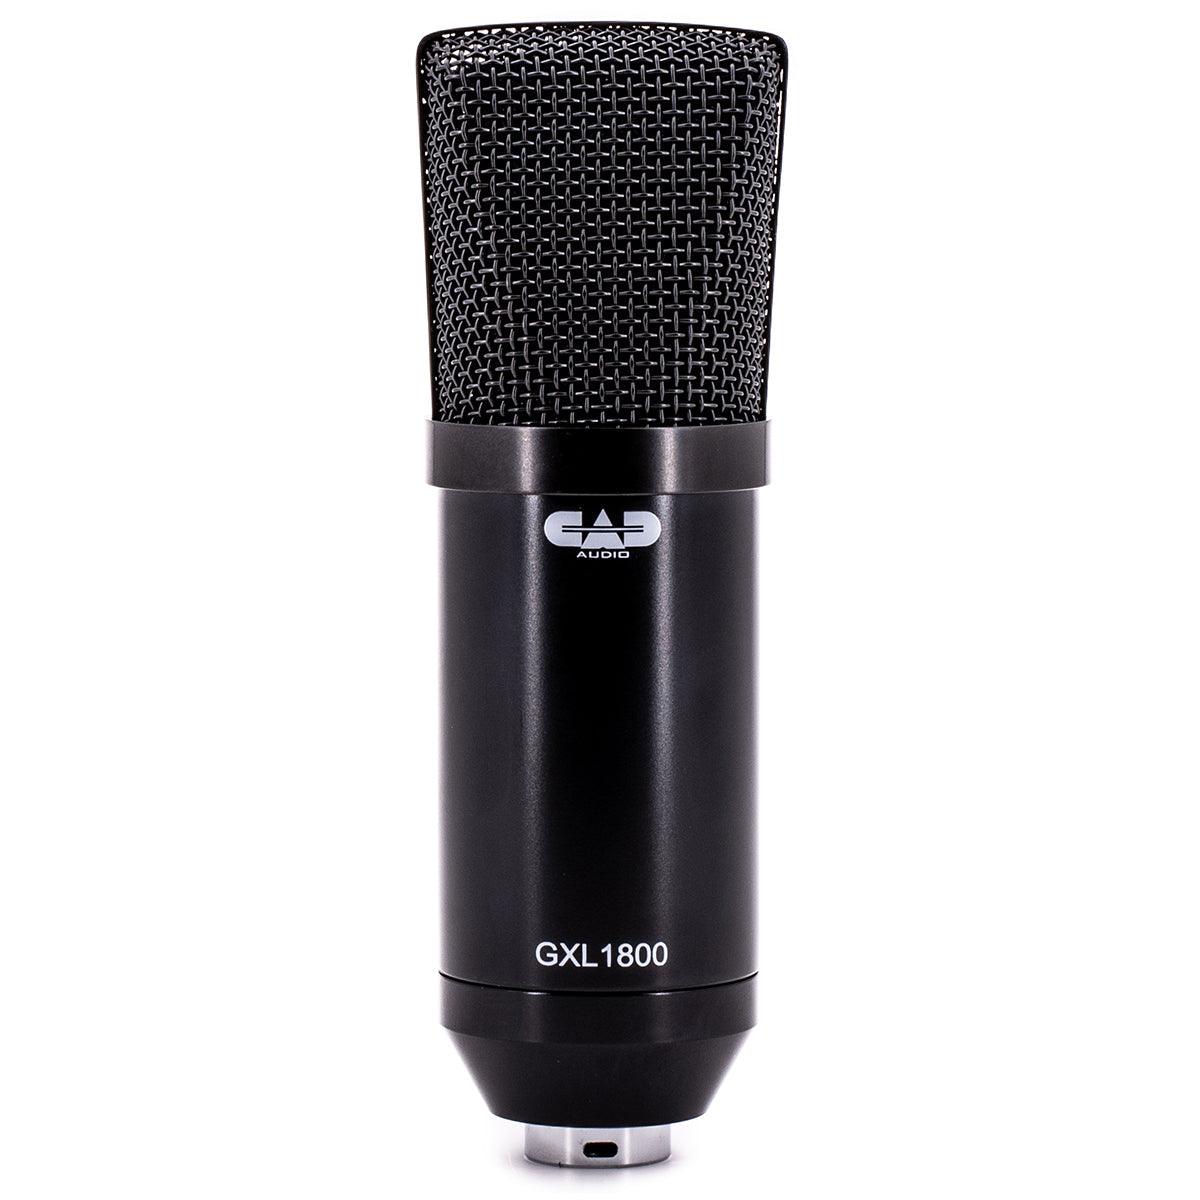 CAD GXL 1800 Side Address Studio Condenser Microphone - DY Pro Audio